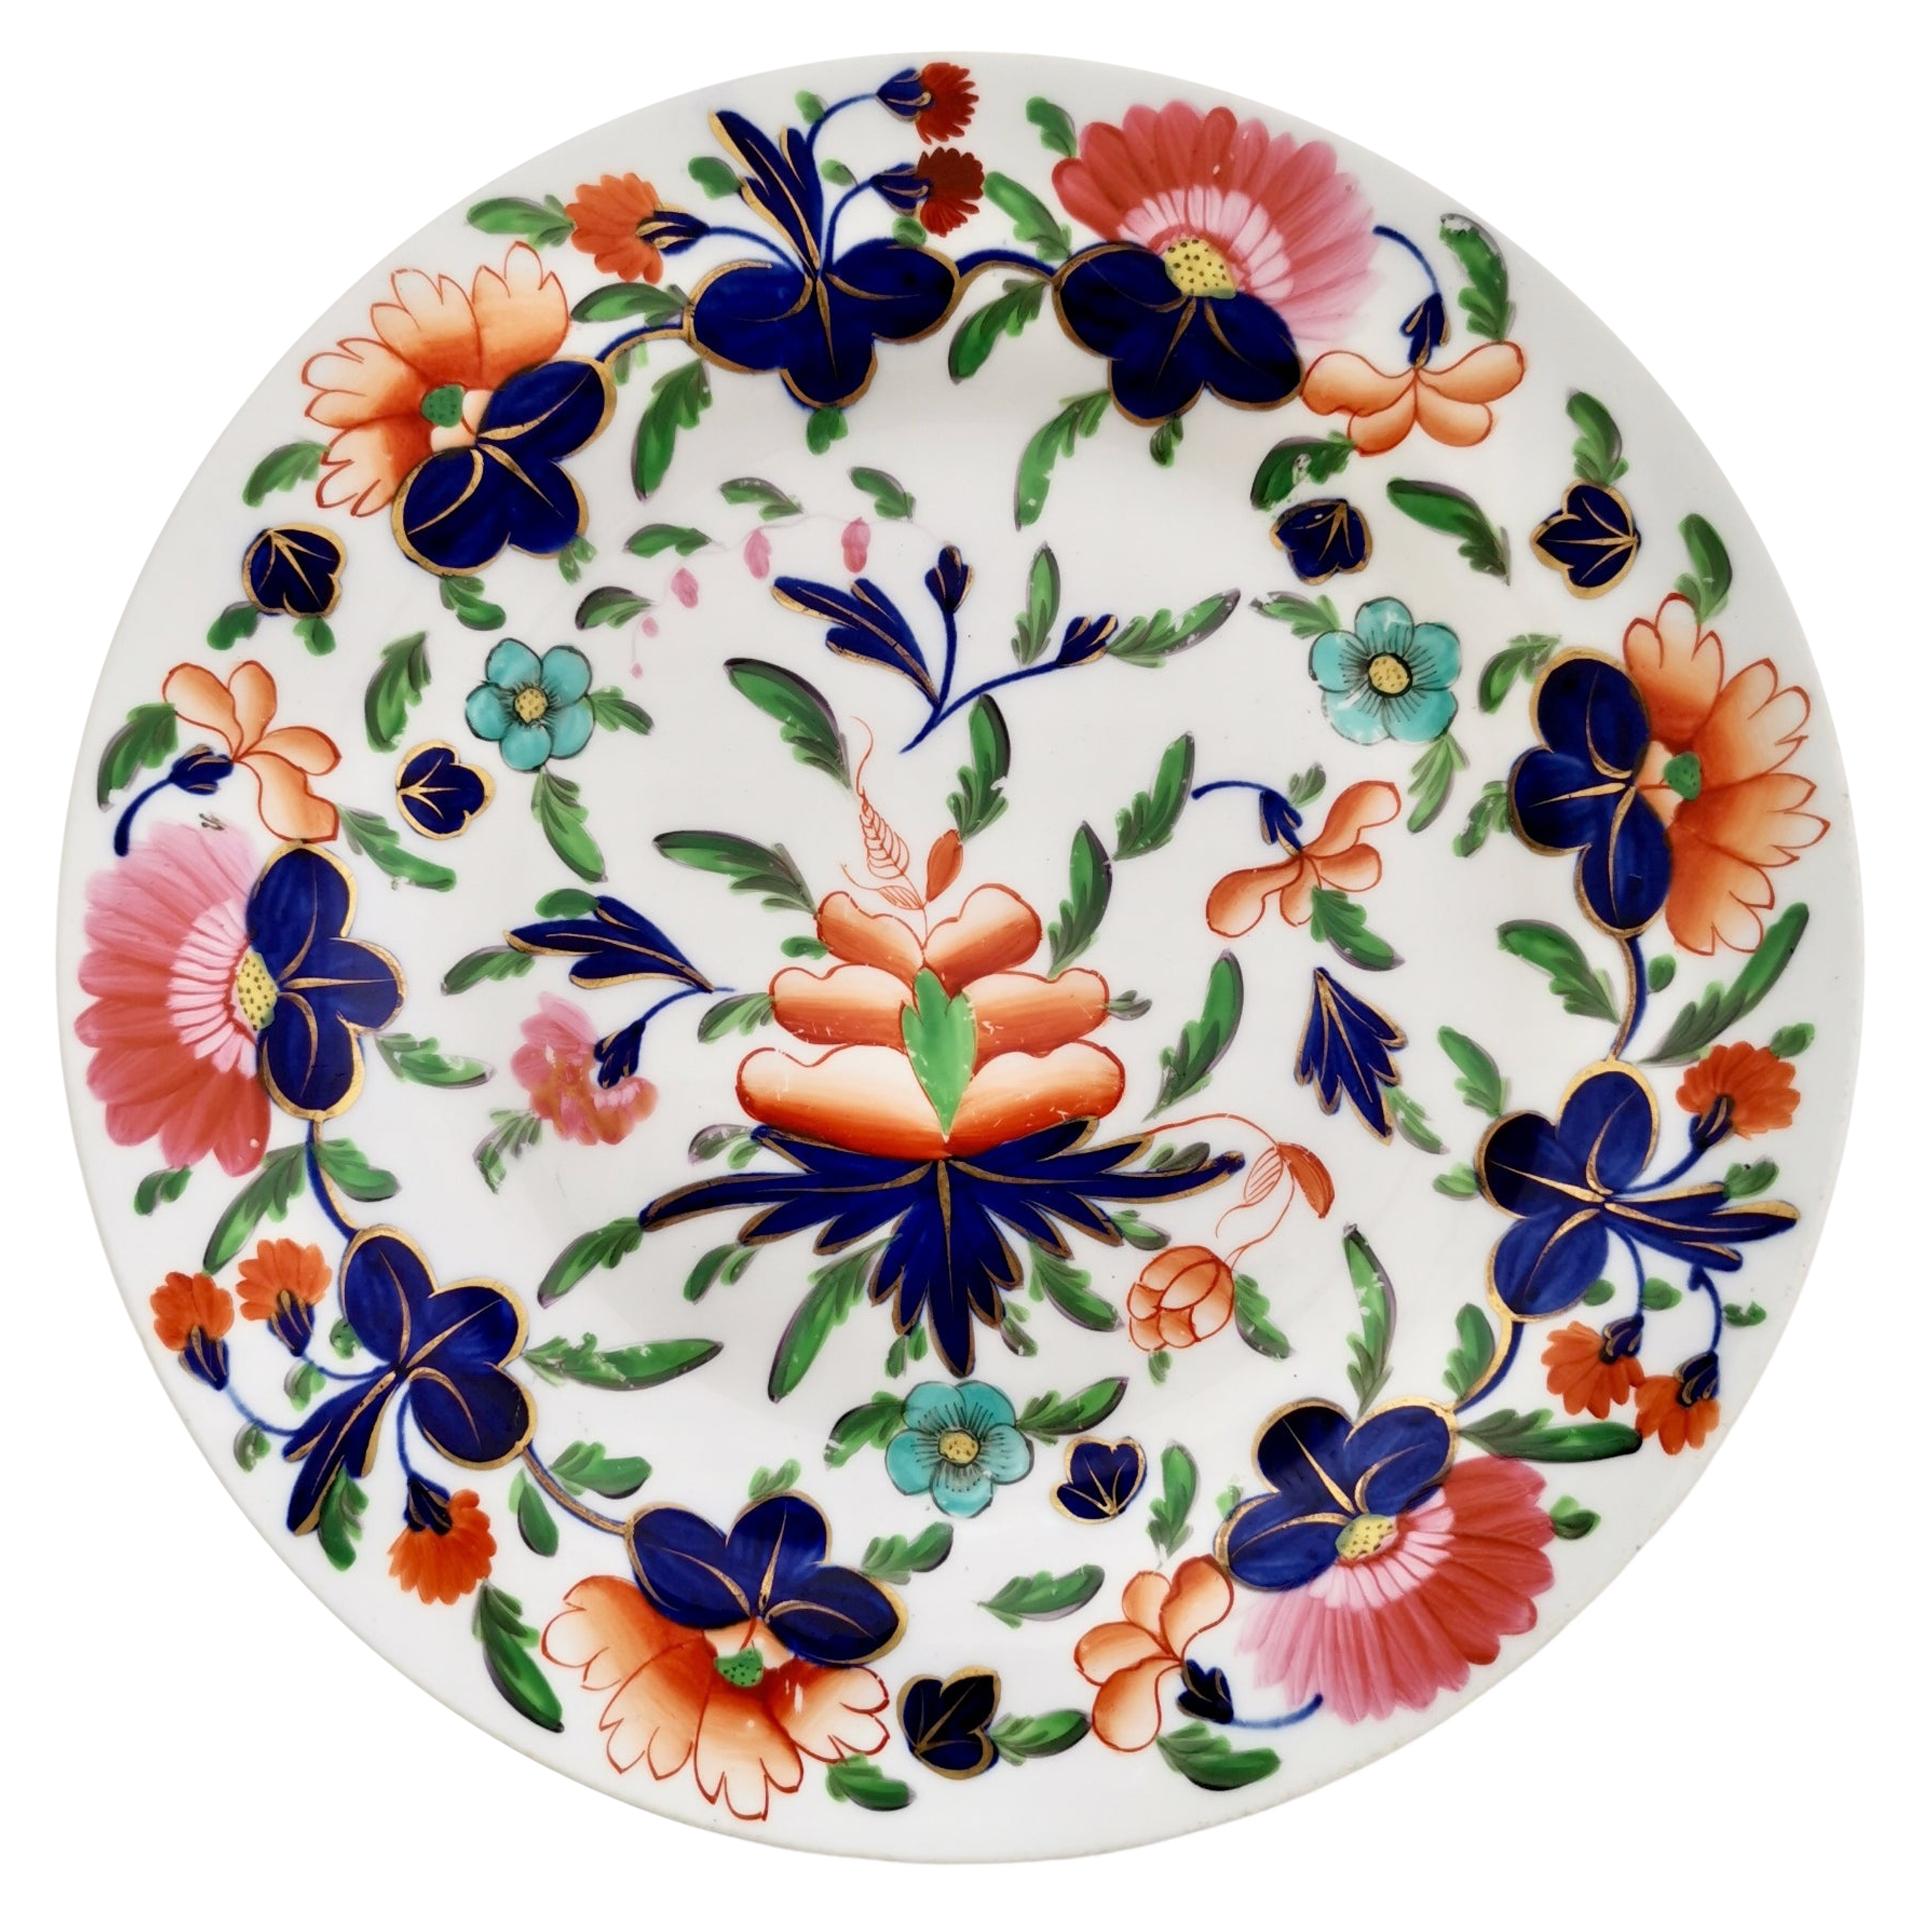 Coalport Porcelain Plate, Imari Pattern, Regency, circa 1820